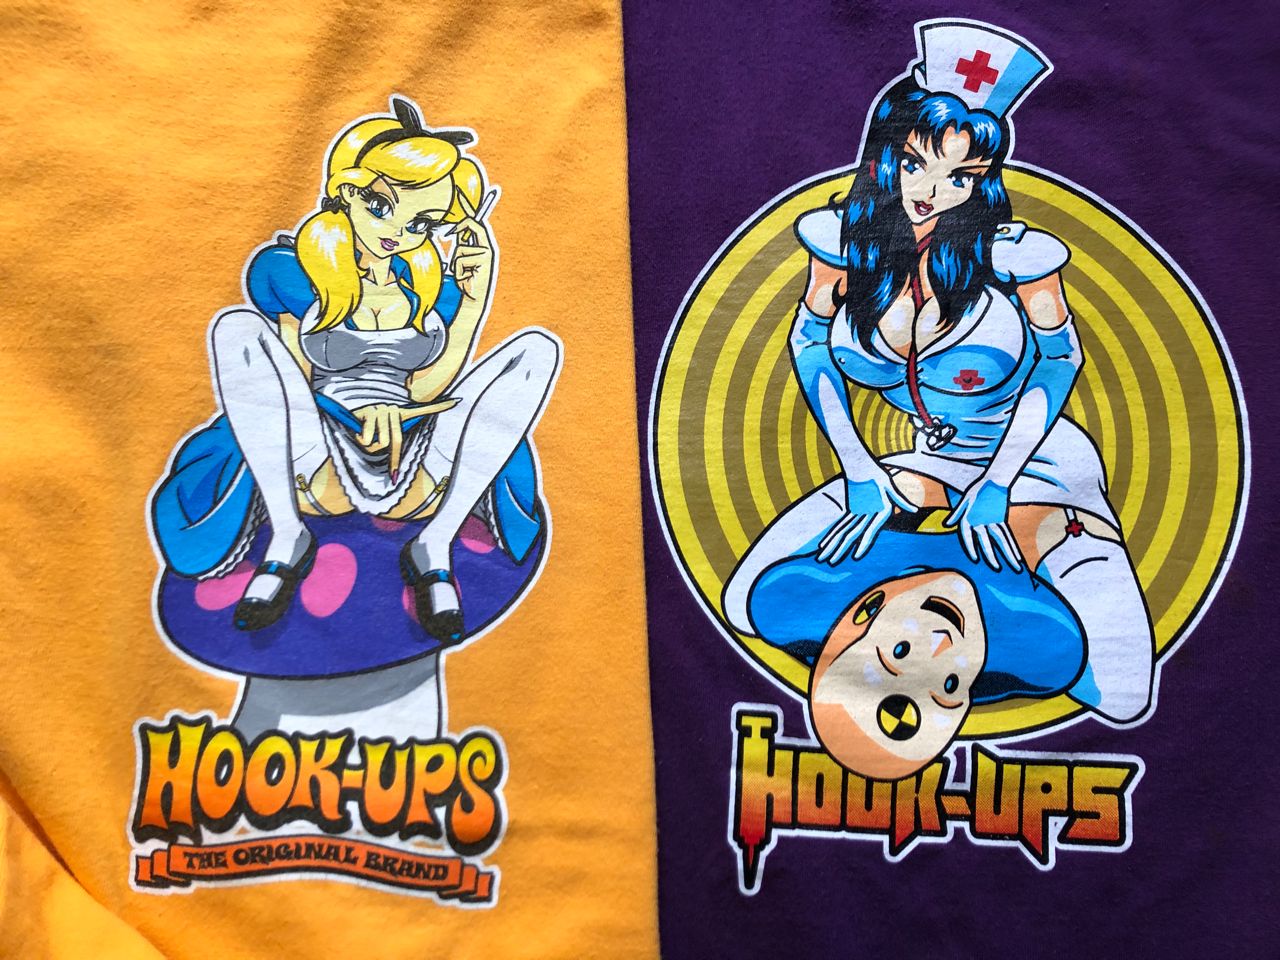 Hook-ups tee Legit or Fake? - Vintage T-Shirt Forum & Community